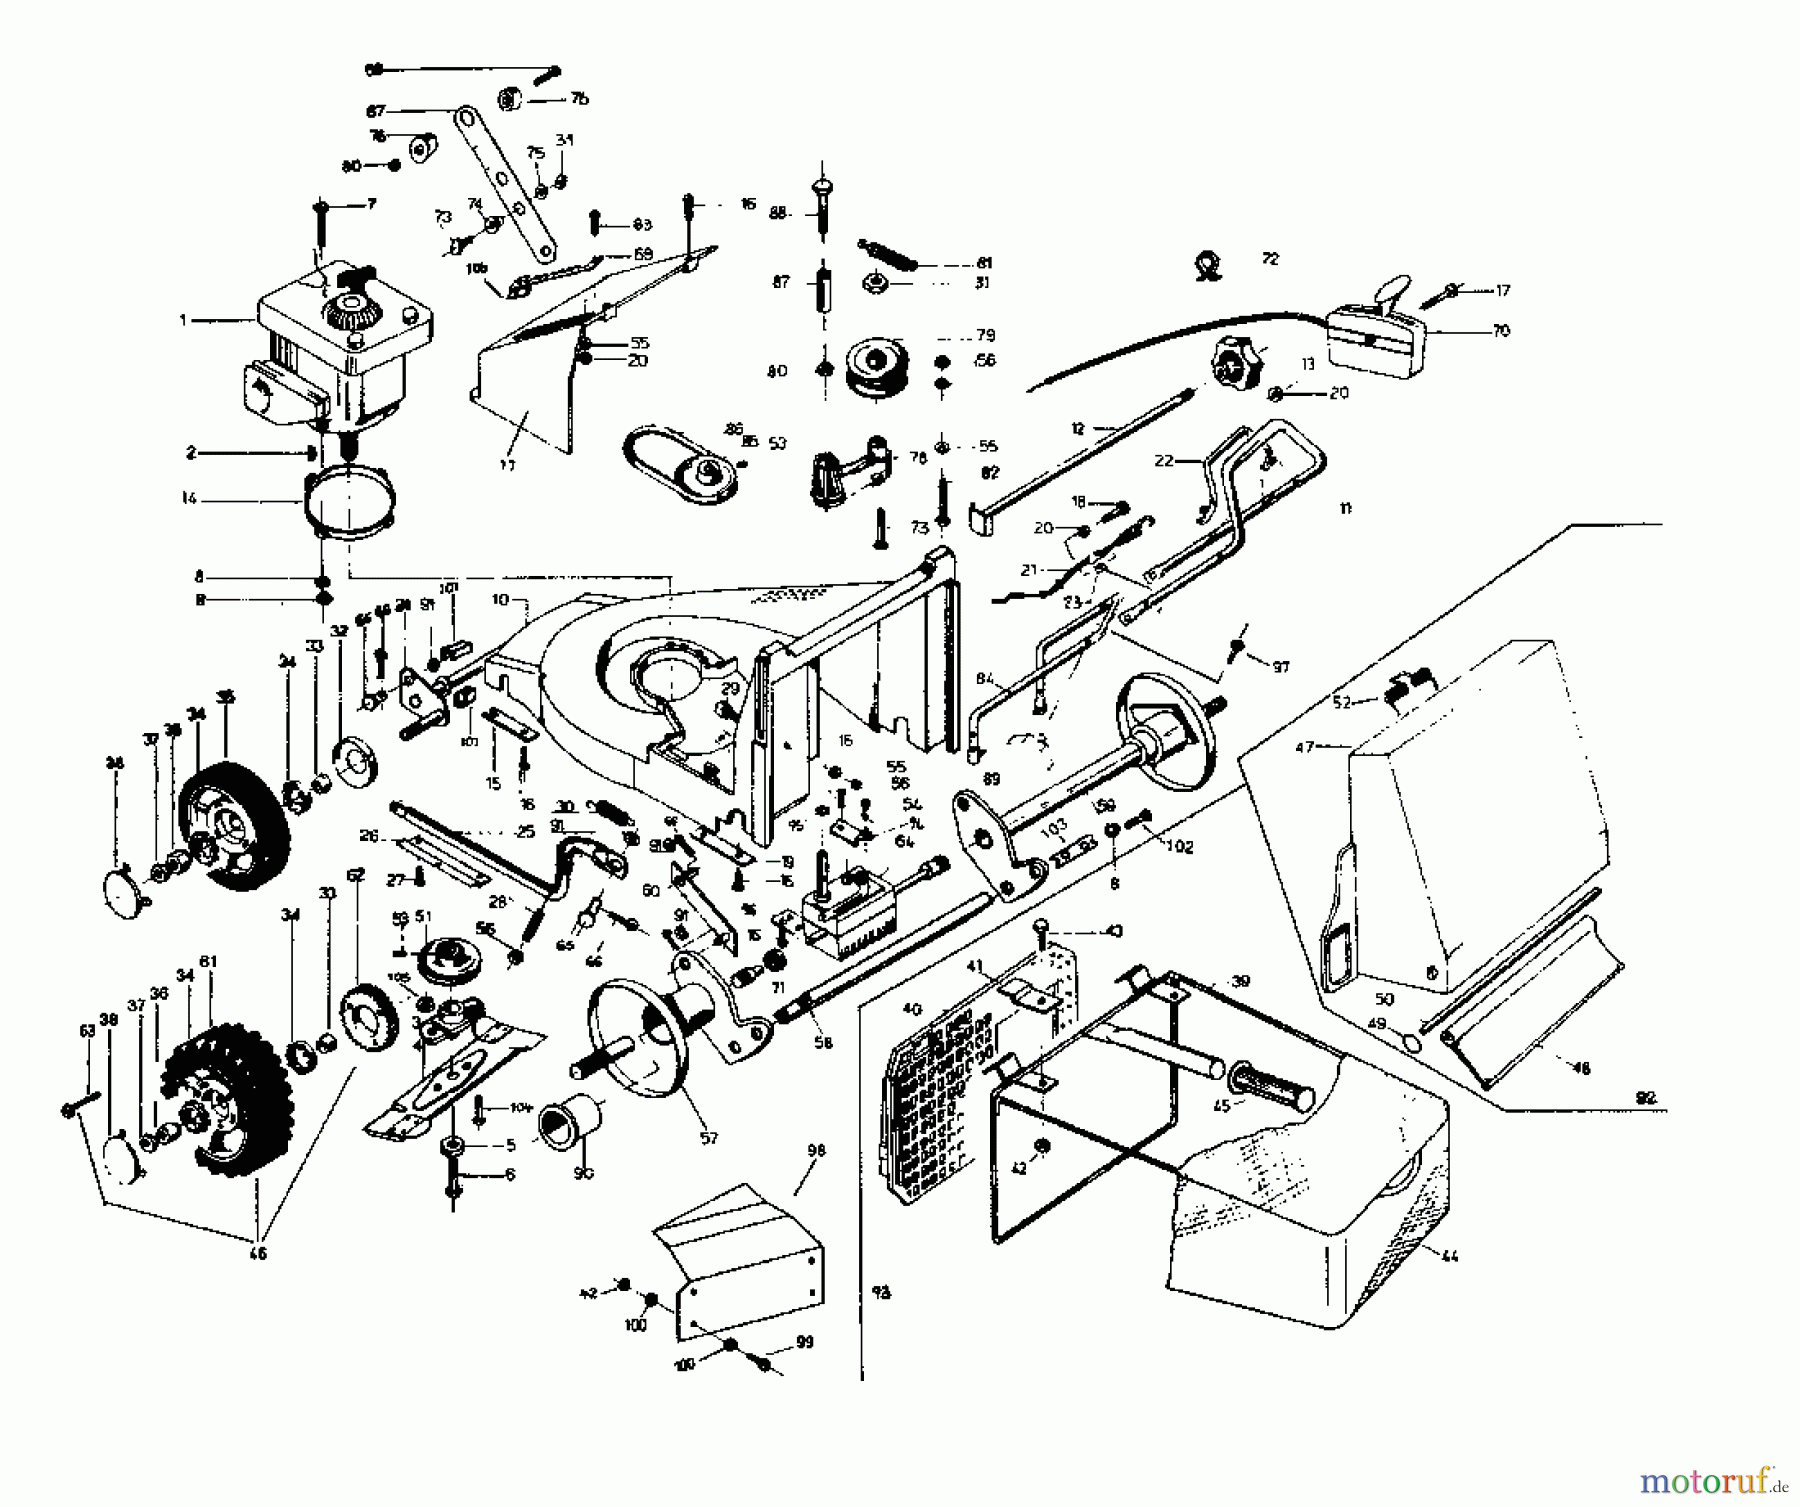  Rotaro Tondeuse thermique tractée ROTARO  48 S 189-0157  (1989) Machine de base